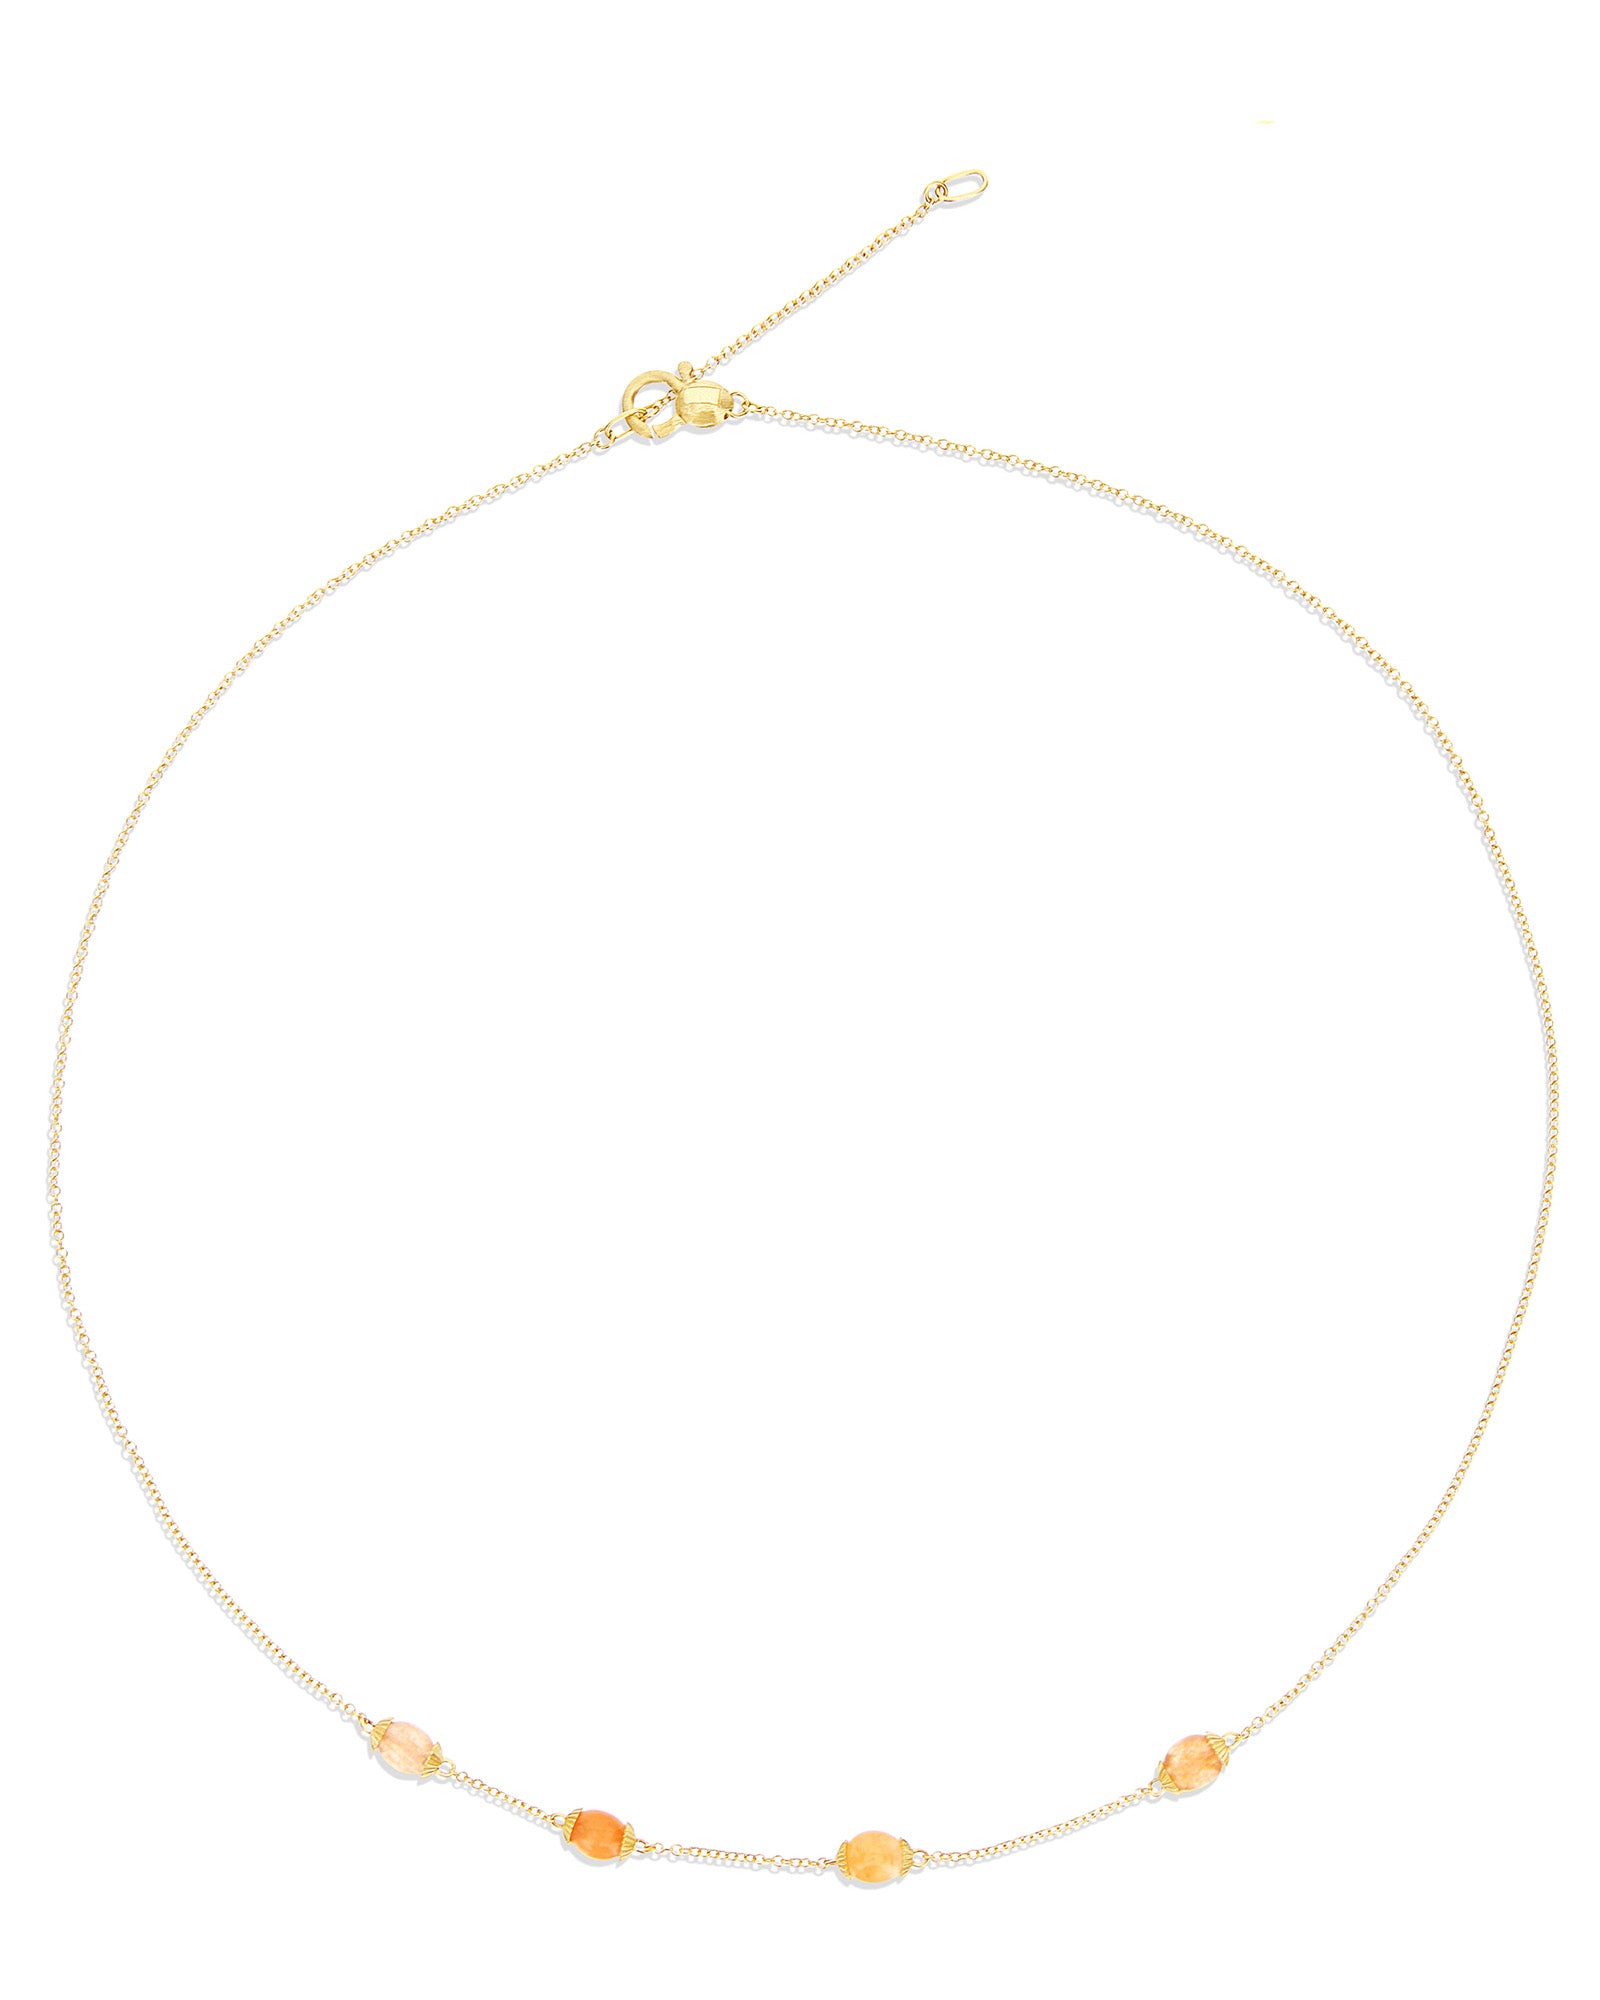 "petra" gold and orange aventurine necklace